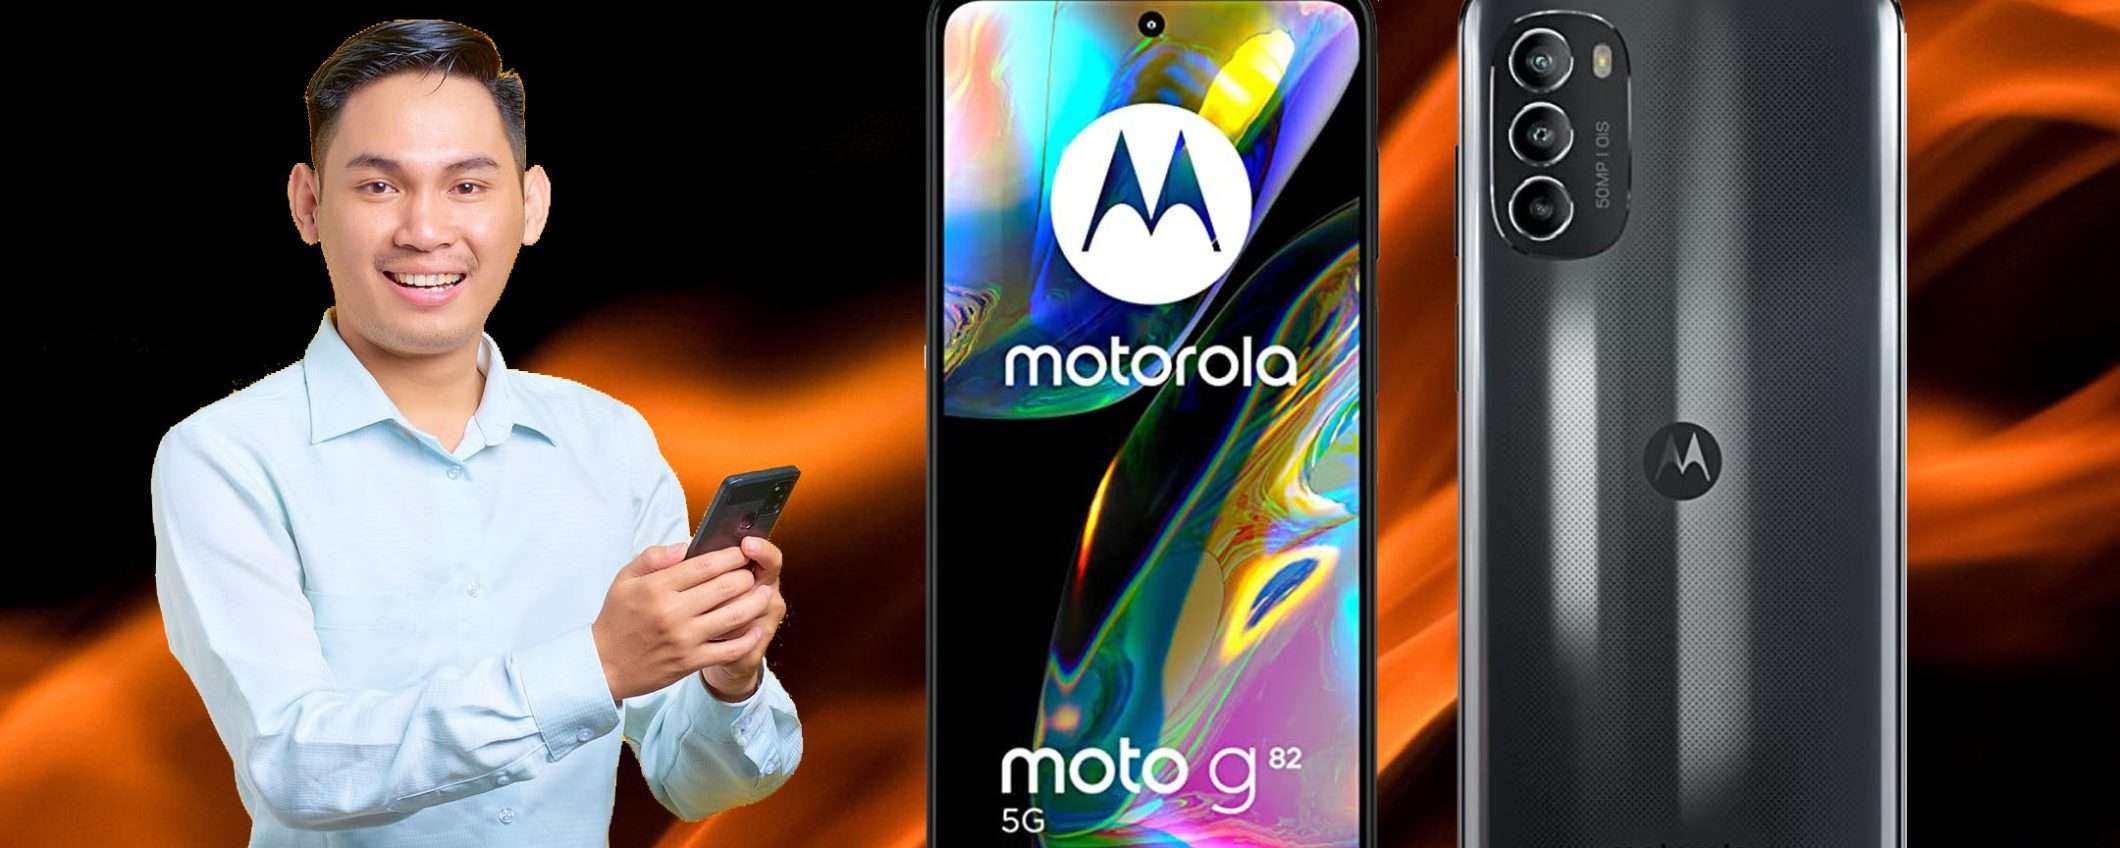 Motorola moto g82 con sconto IMPERDIBILE del 20%, solo su Amazon